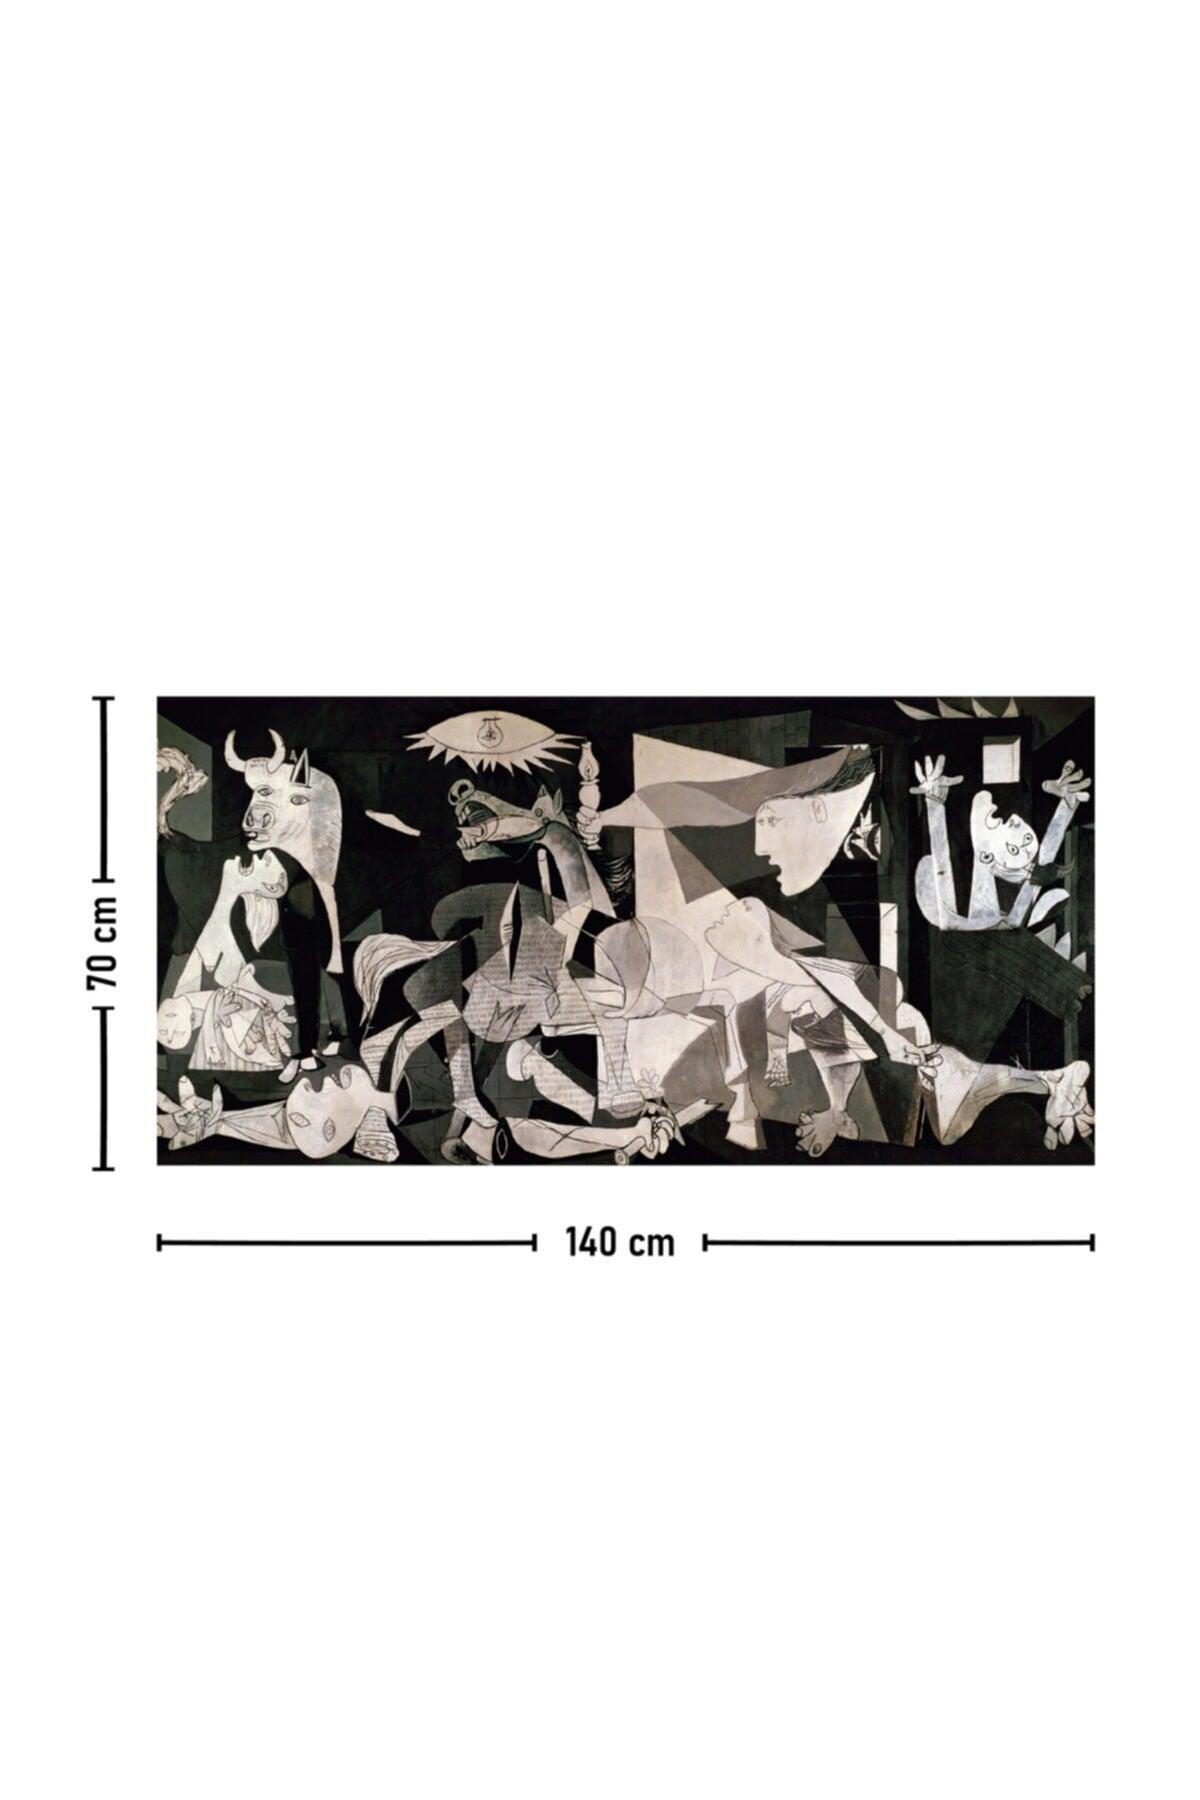 Pablo Picasso Guernica Wall Covering Carpet 70x140 Cm - Swordslife